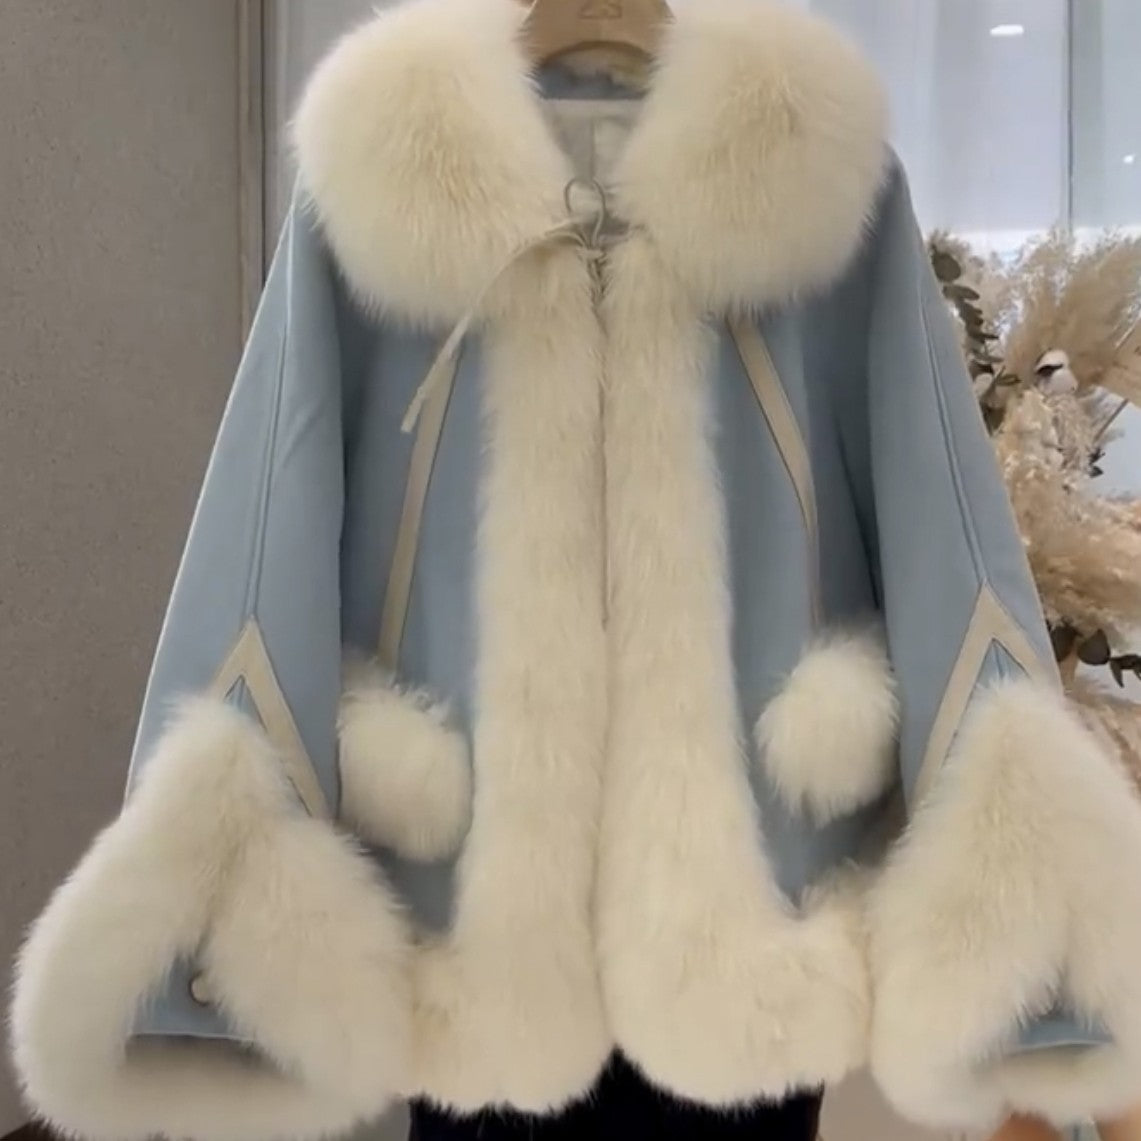 One Piece Patchwork Fur Coat For Women